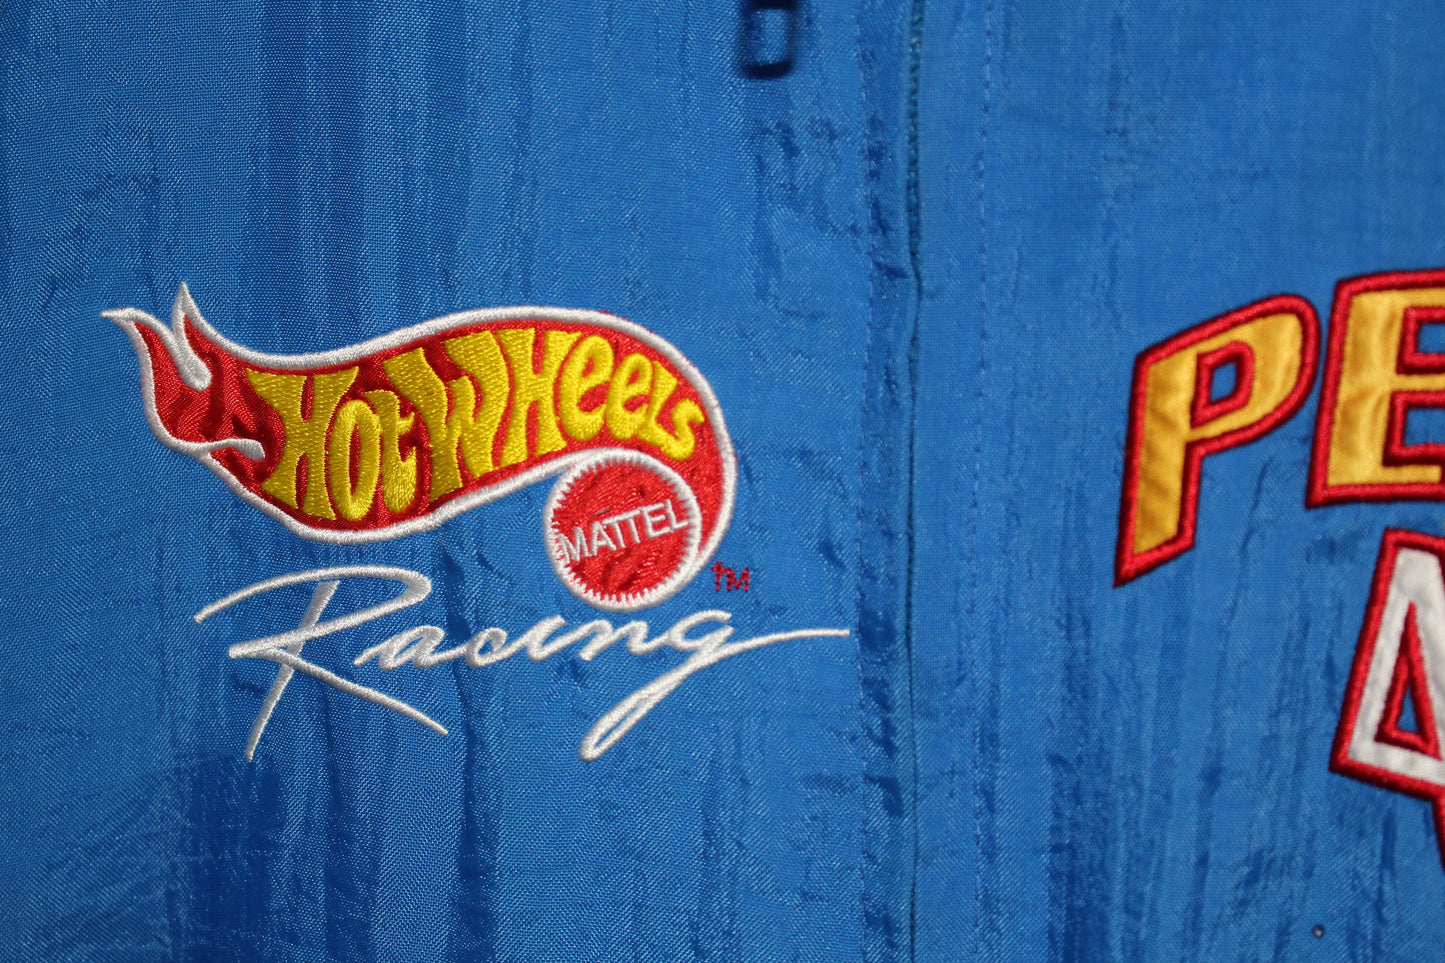 Rare Hot Wheels Racing NASCAR Kyle Petty #44 (M)